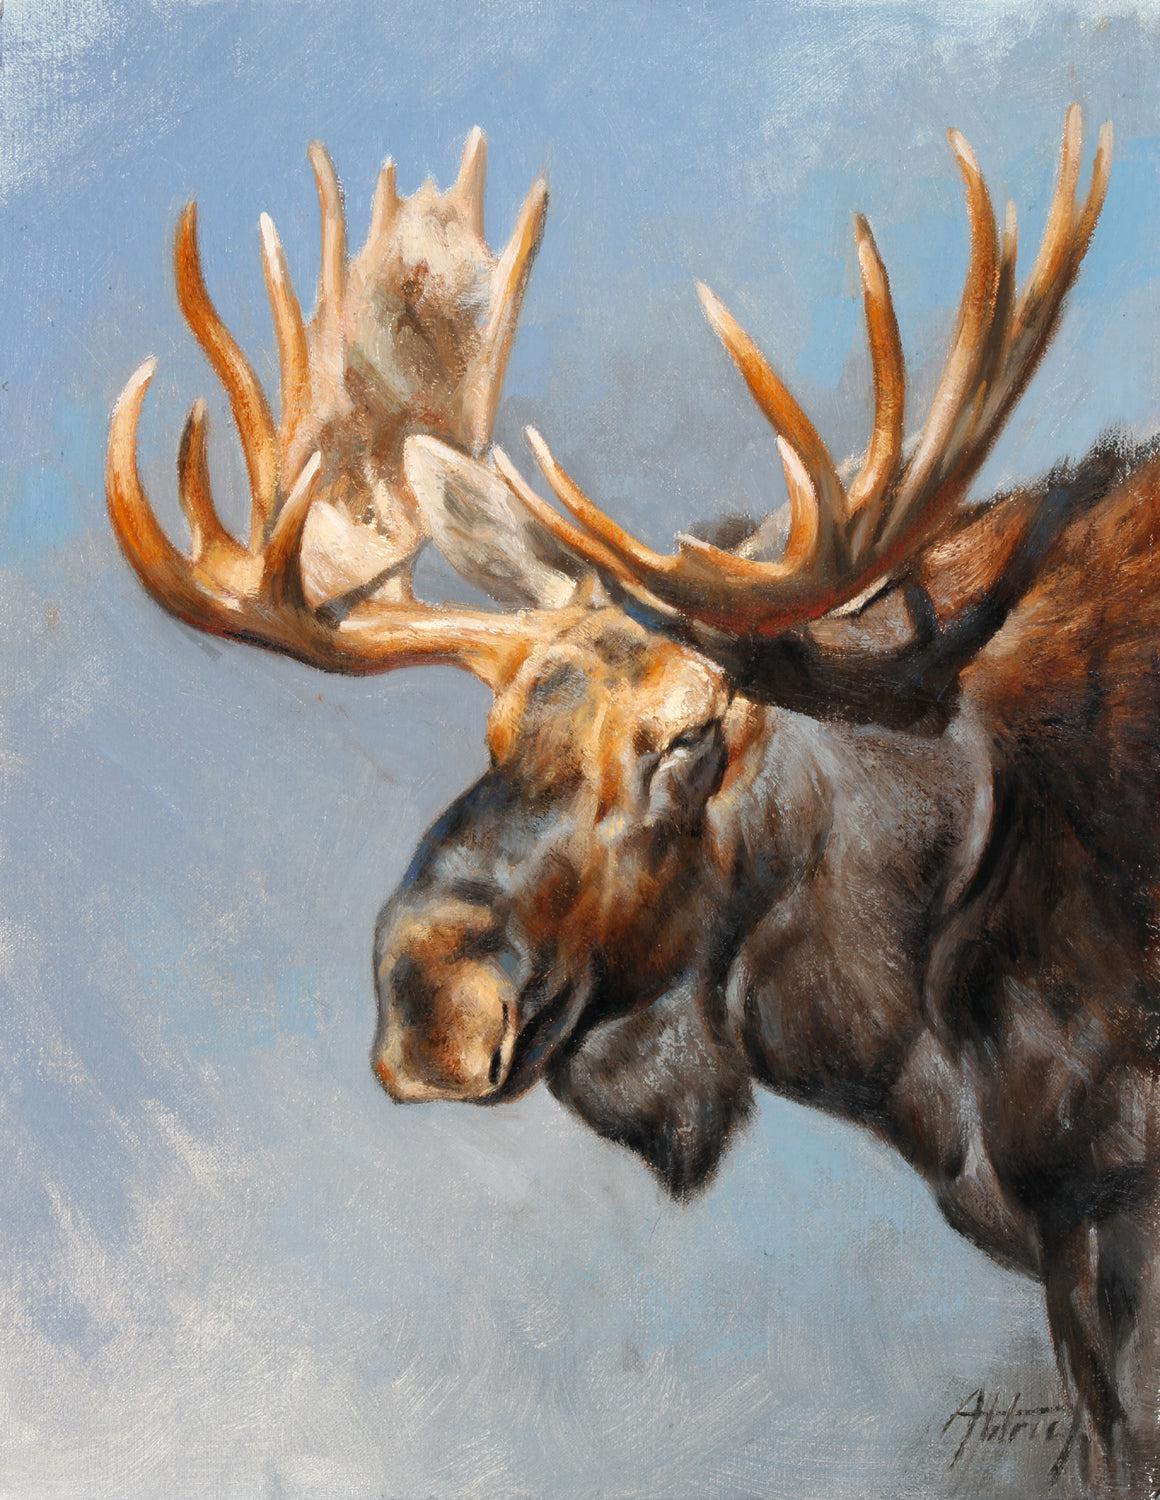 Old Bull-Painting-Edward Aldrich-Sorrel Sky Gallery